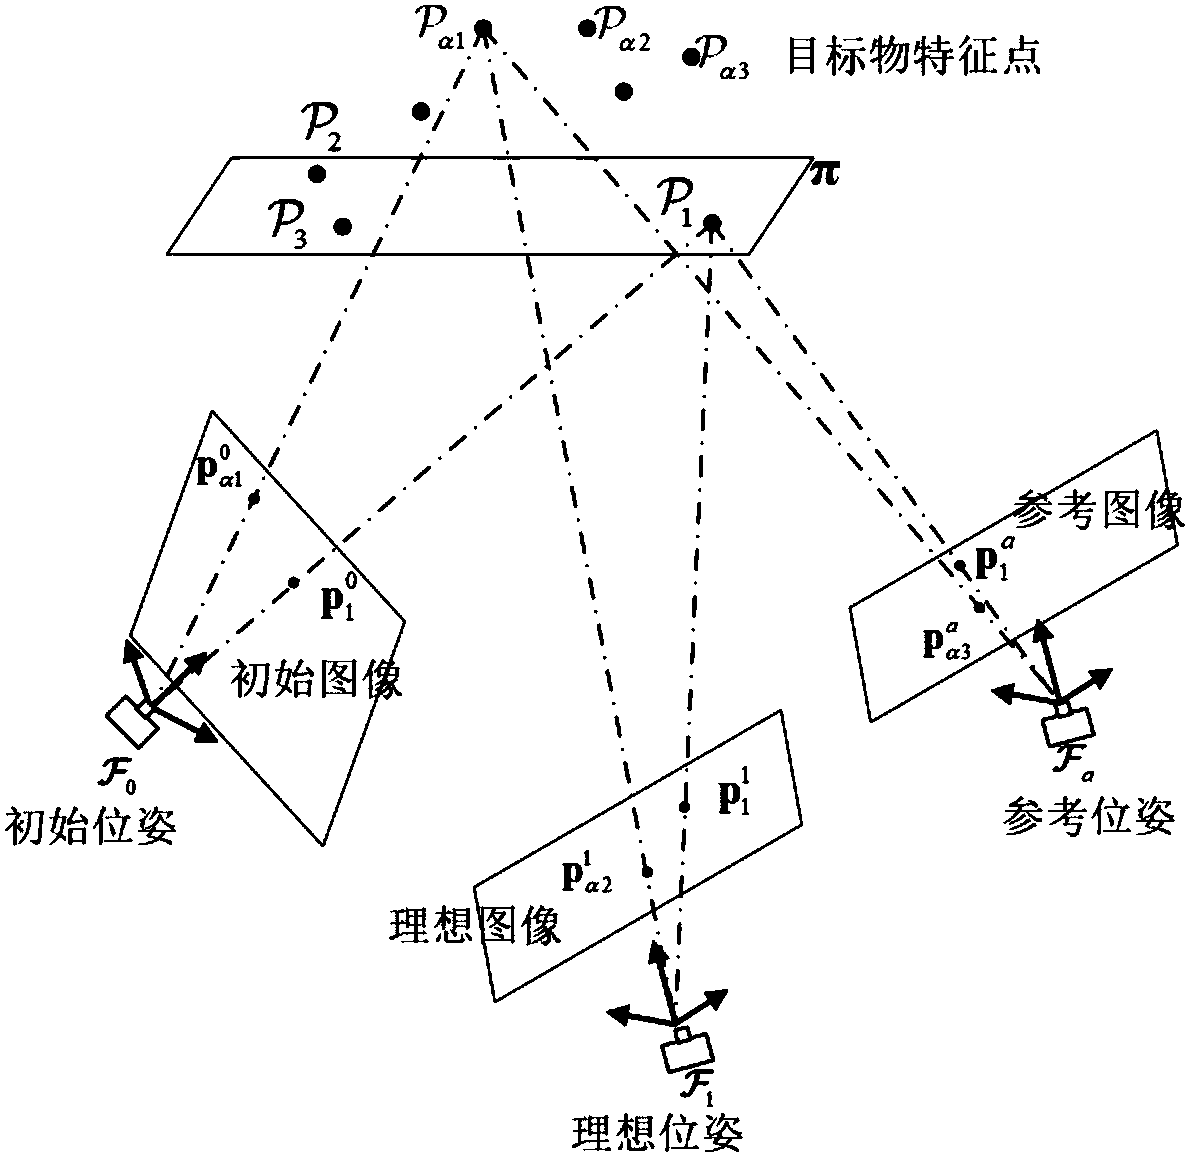 Uncalibrated vision servo trajectory planning method of robot based on projective homography matrix